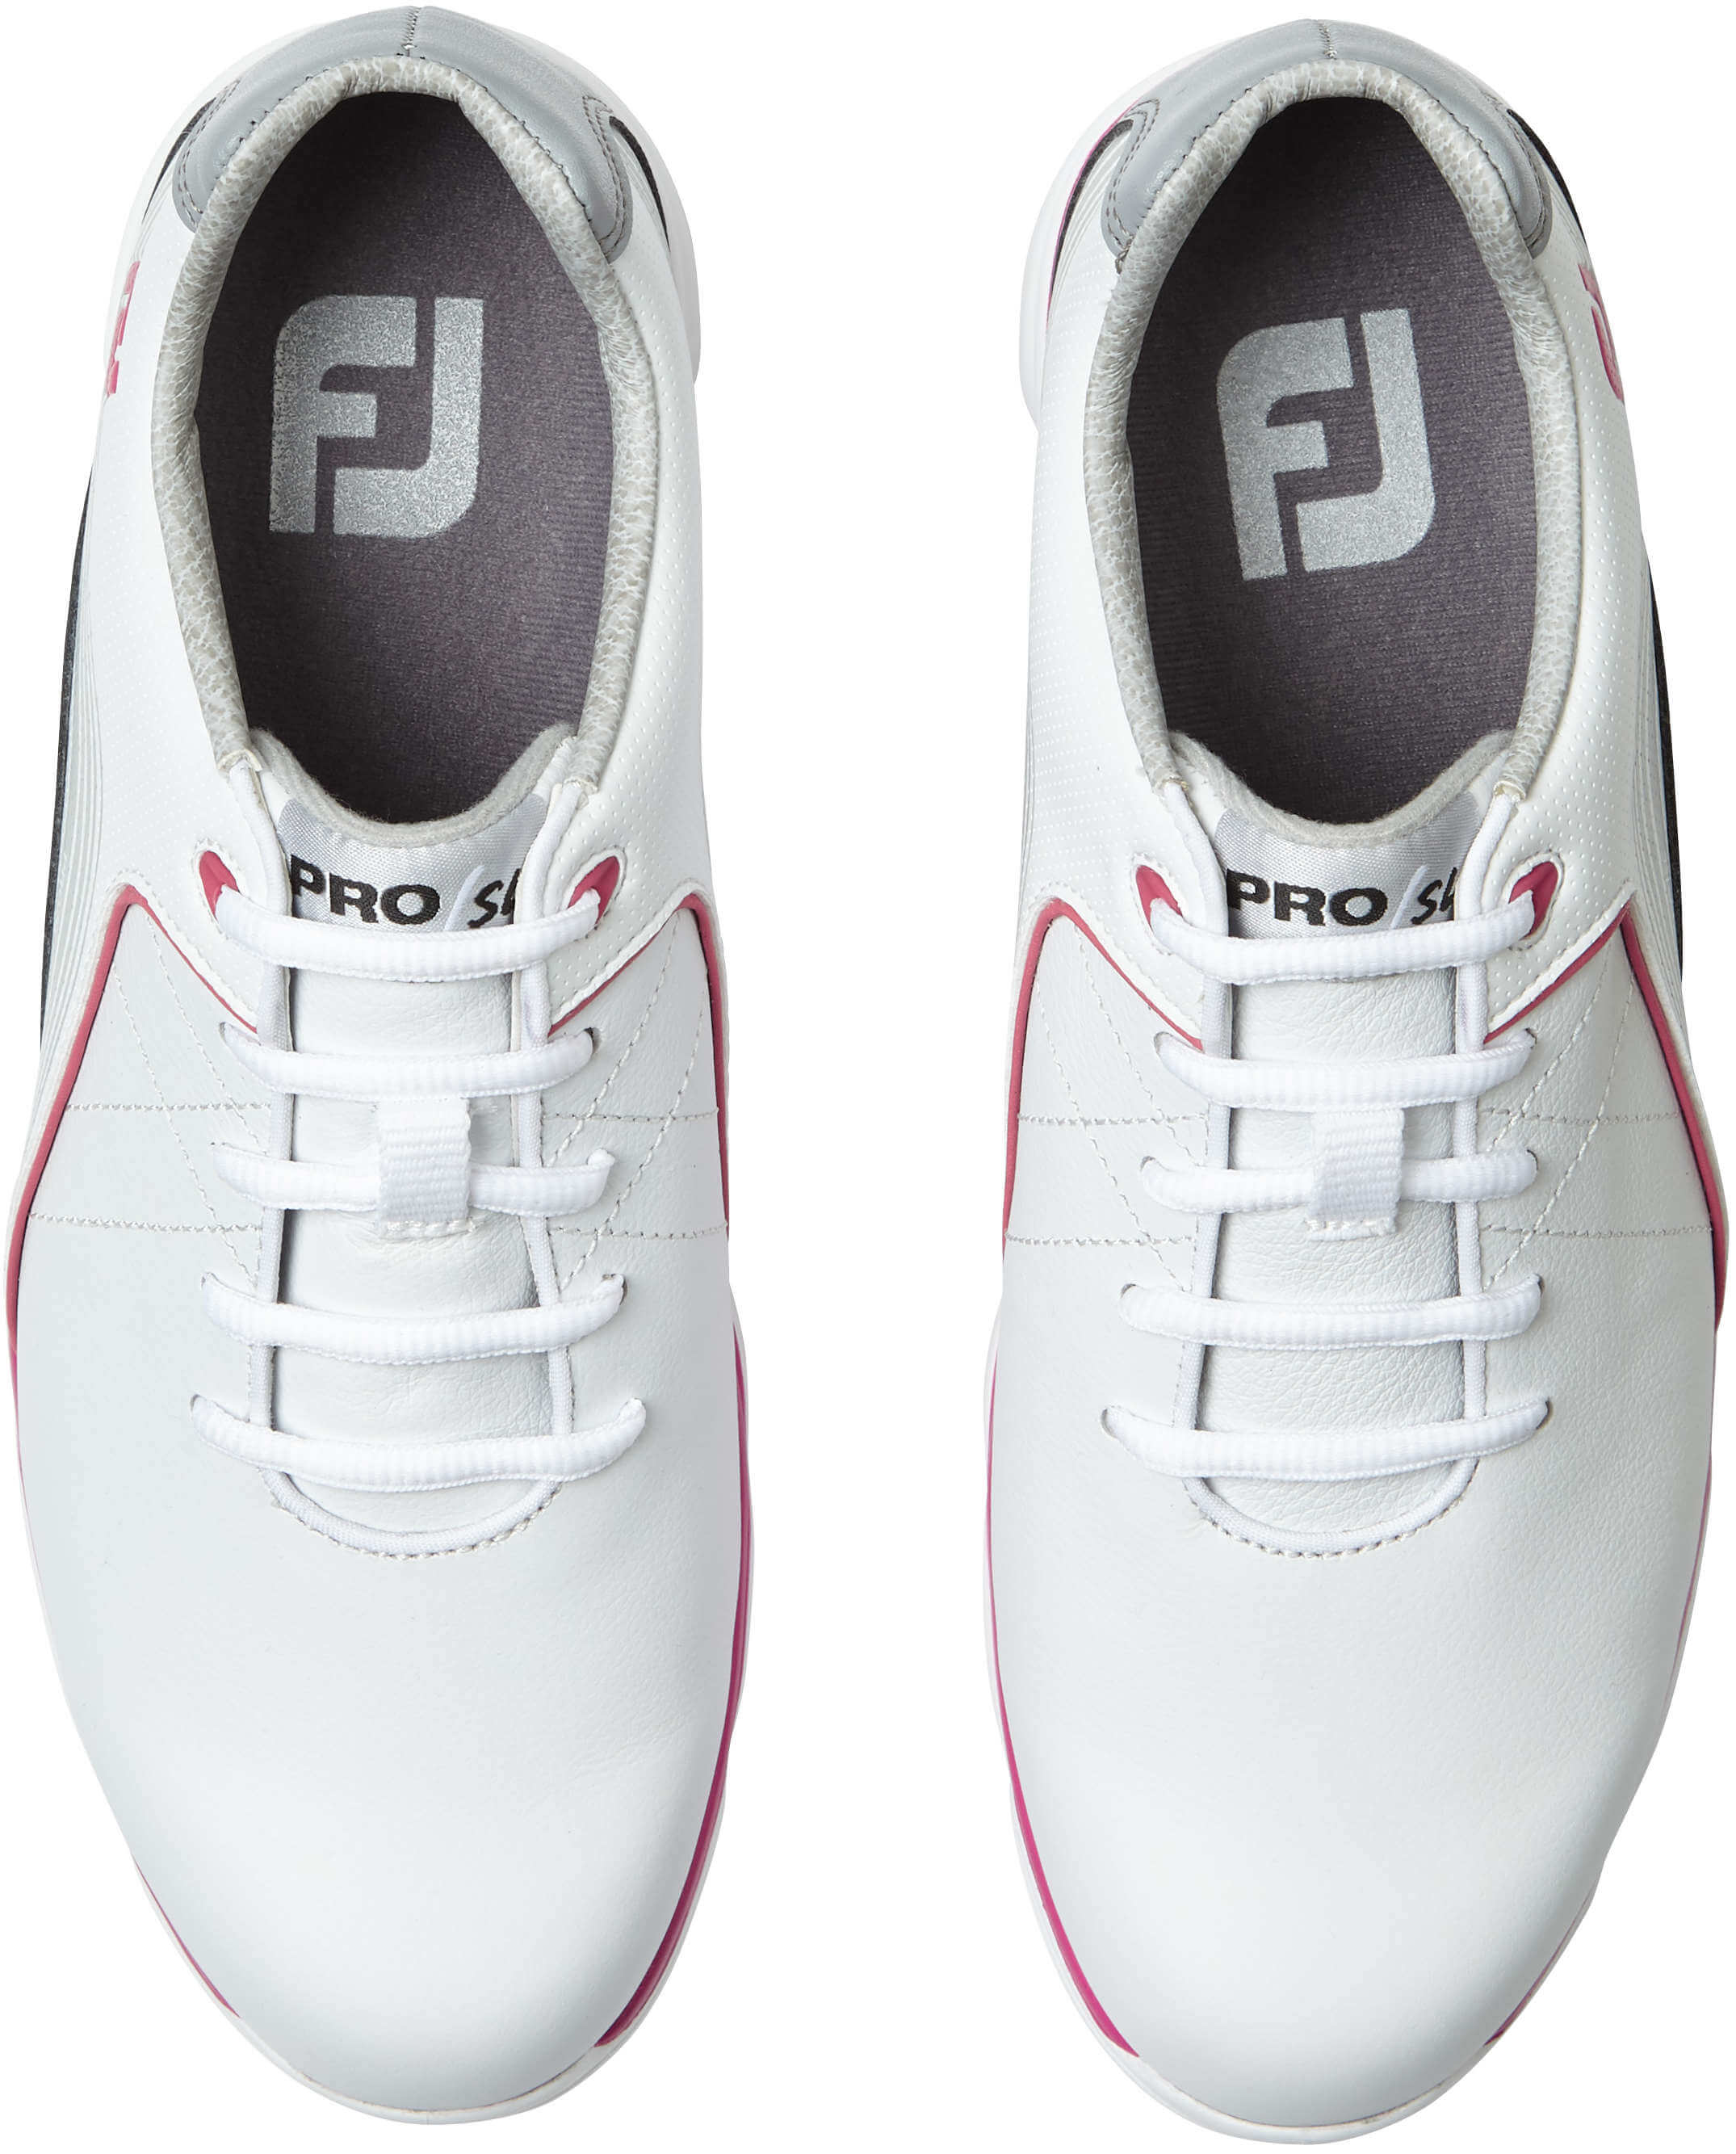 FootJoy PRO/SL Golfschuh, W, white/grey/fuchsia